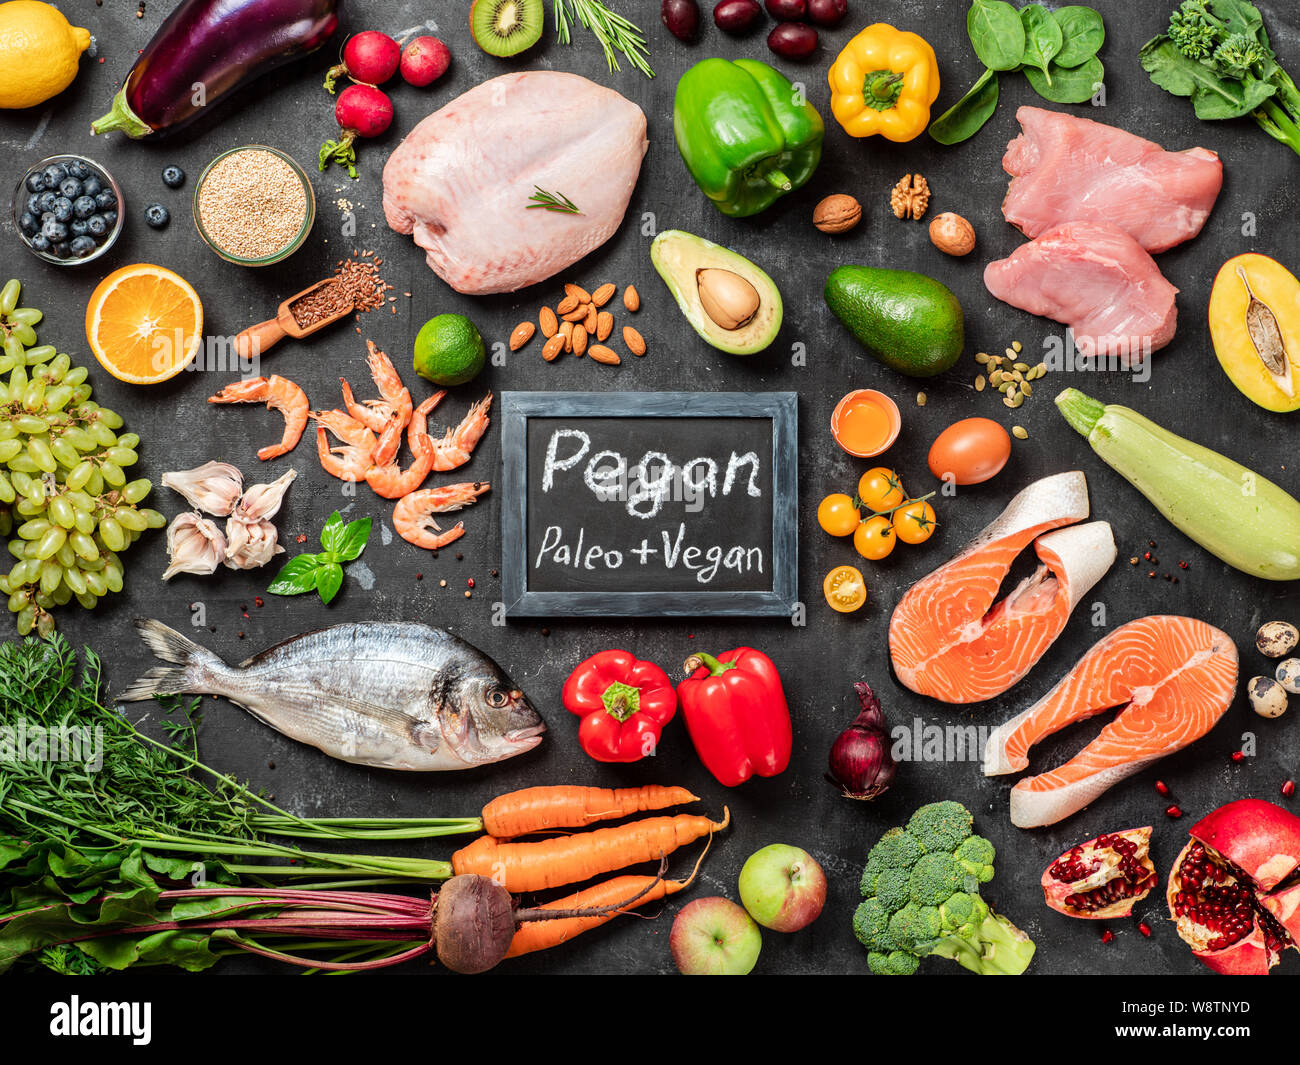 Dieta Pegan conept. Vegan plus paleo dieta ingredienti alimentari - Verdura, frutta, carne cruda e pesce su sfondo scuro. Vista superiore o laici piatta Foto Stock